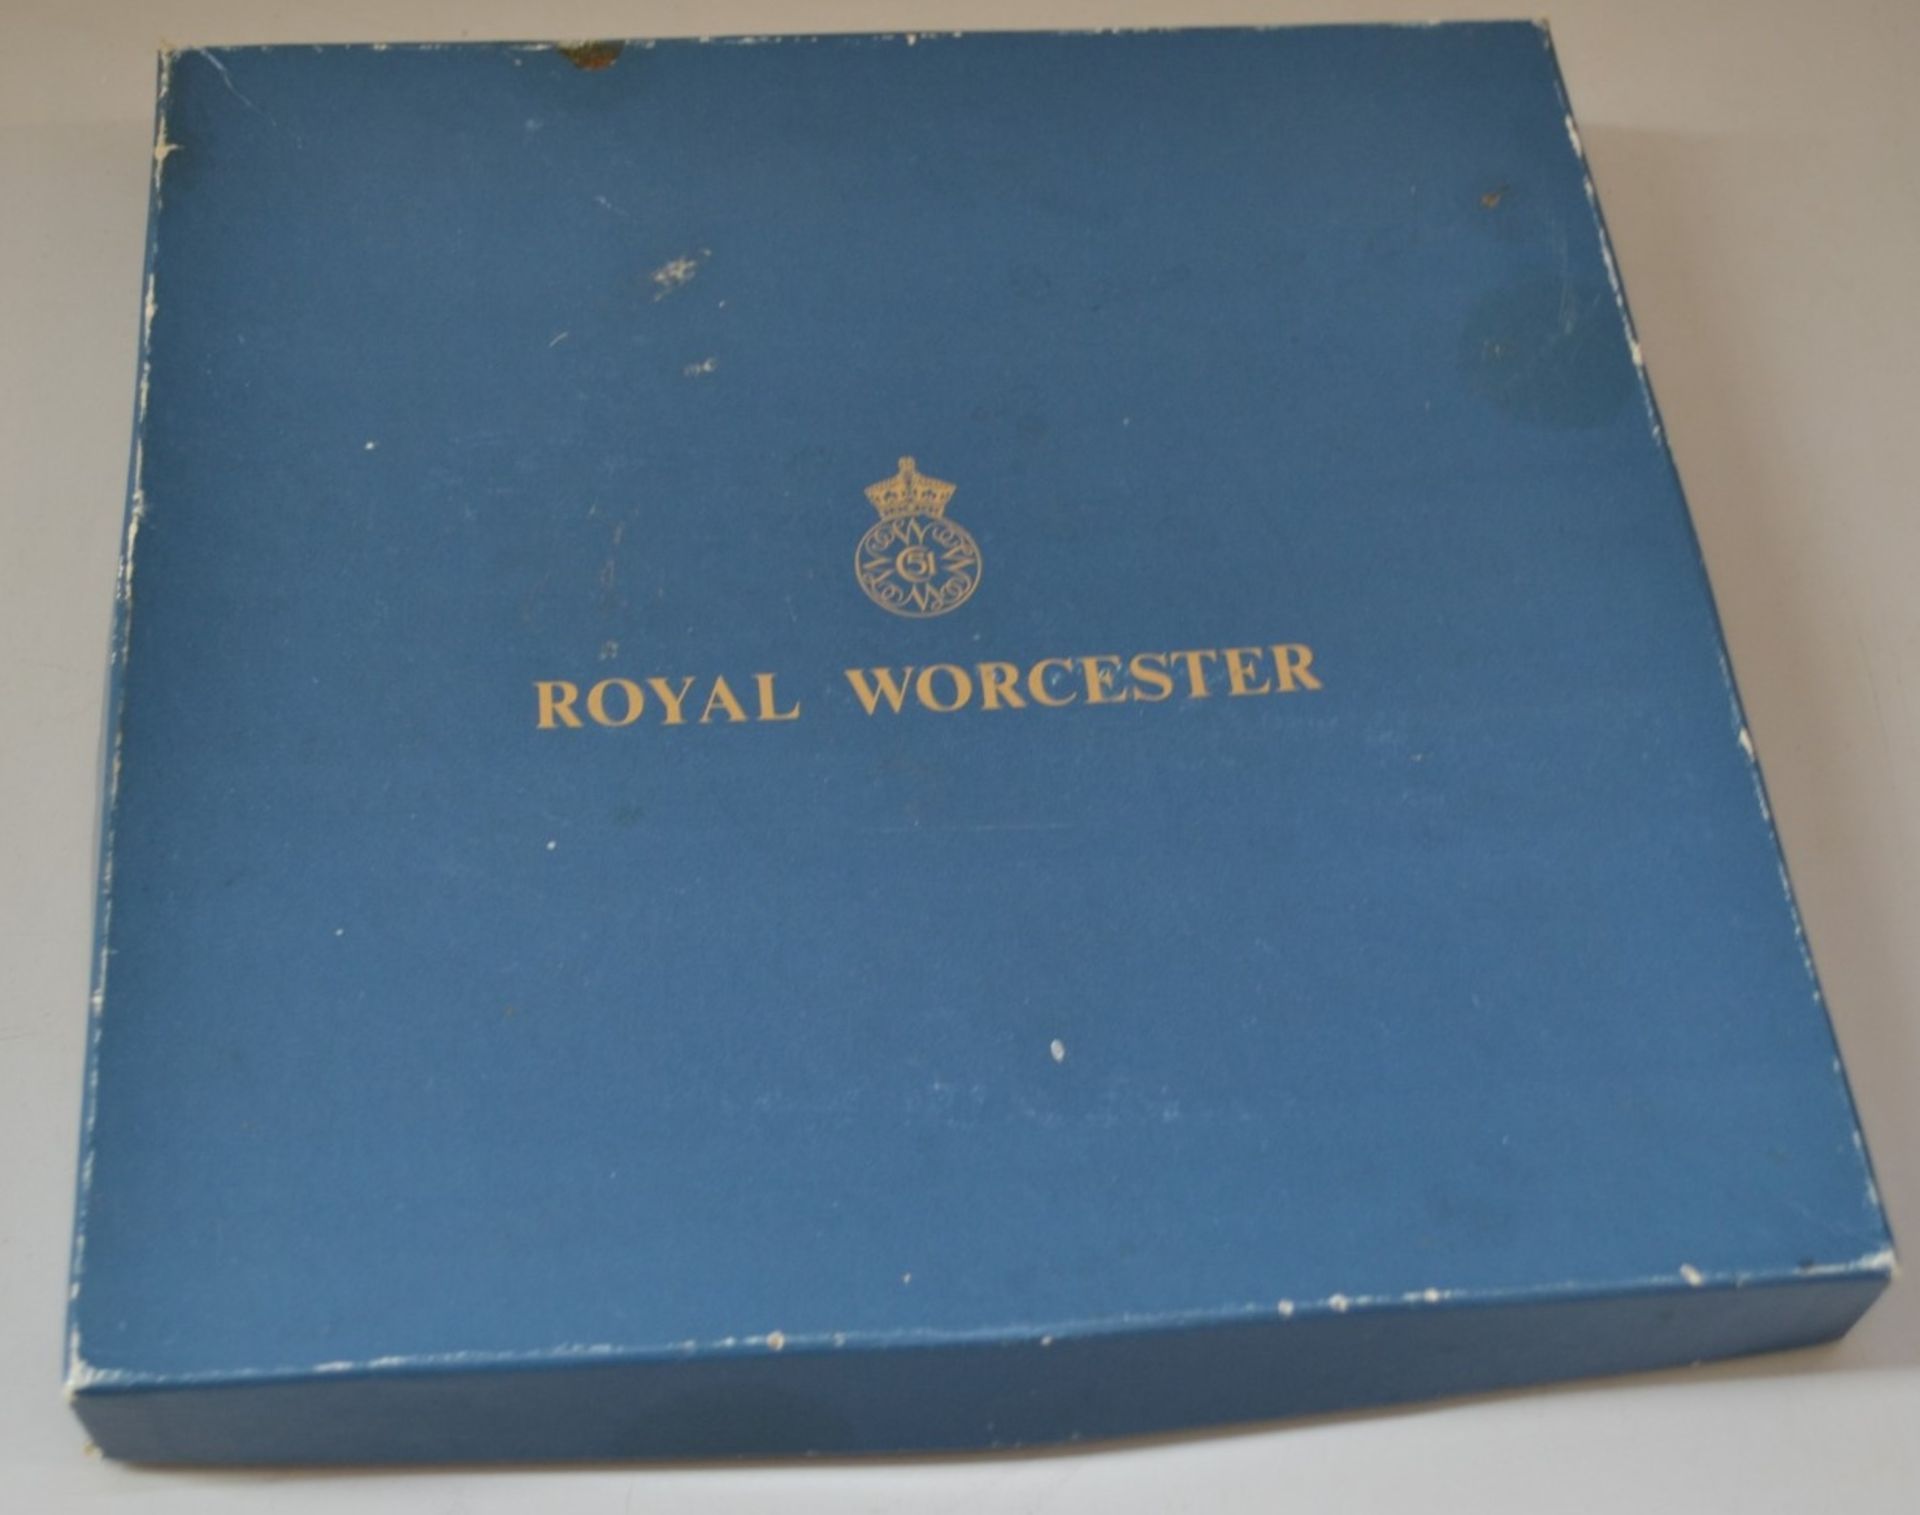 1 x Royal Worcester Plate - Ref J2153 - CL314